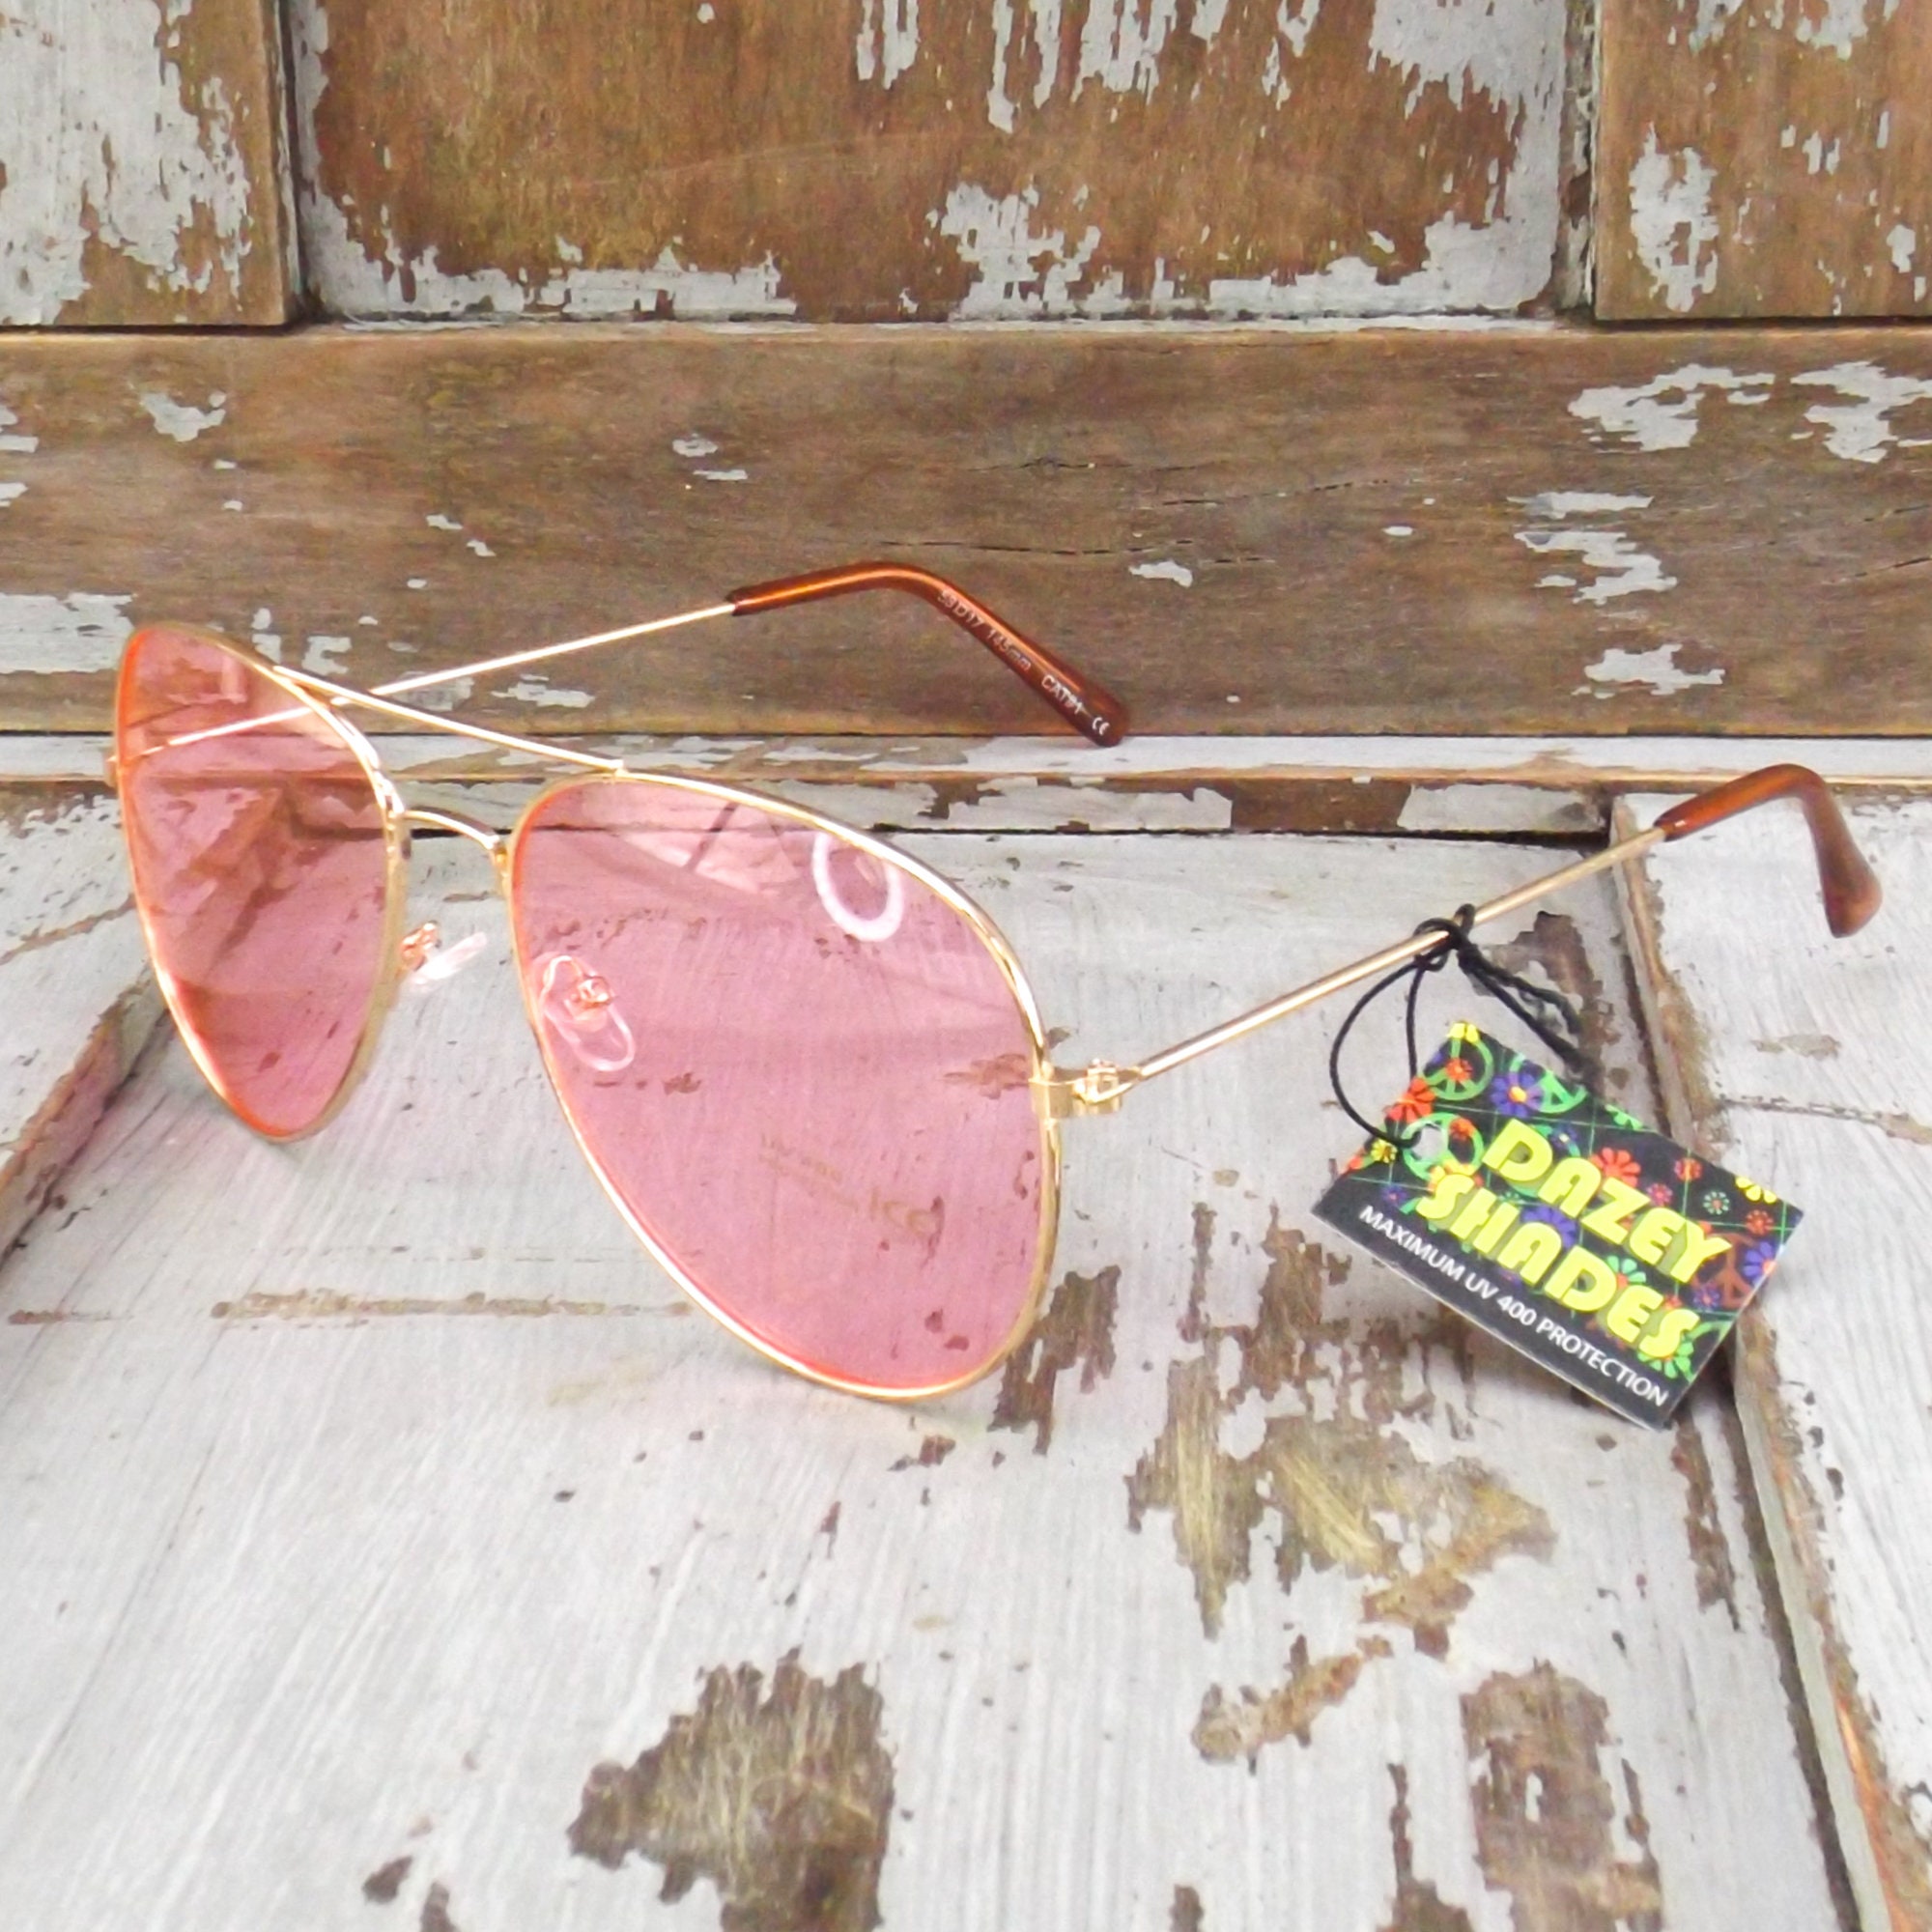 Aviator Sunglasses – Pink